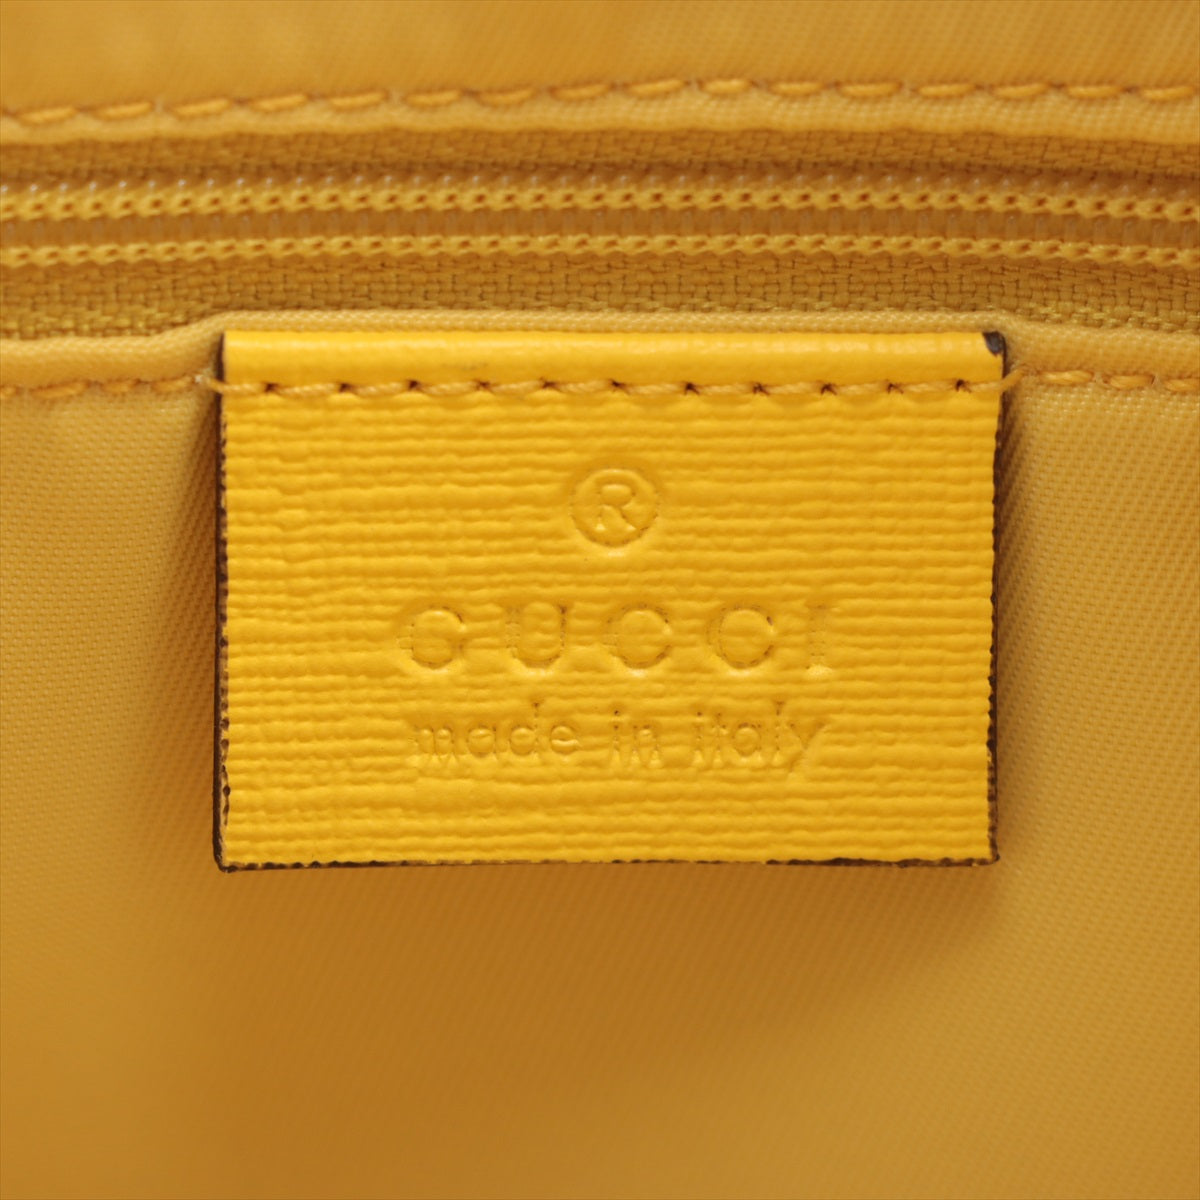 Gucci Children's GG Supreme PVC & leather Backpack Multicolor 433578